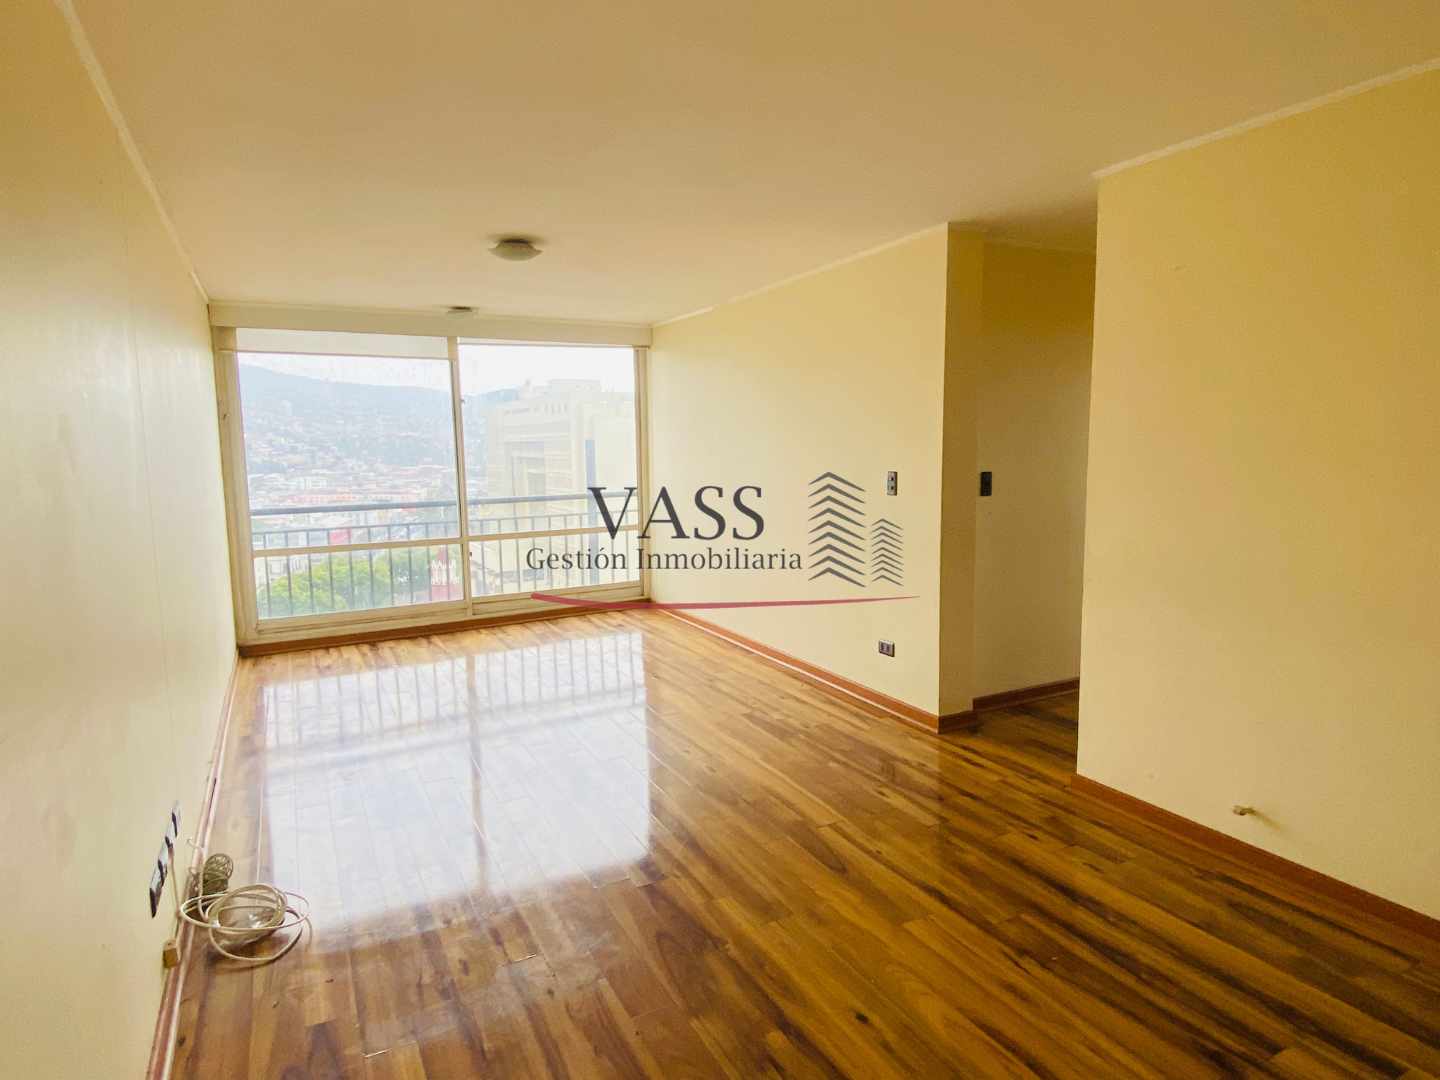 VASS Gestión Inmobiliaria vende departamento en sector Barón, Valparaiso